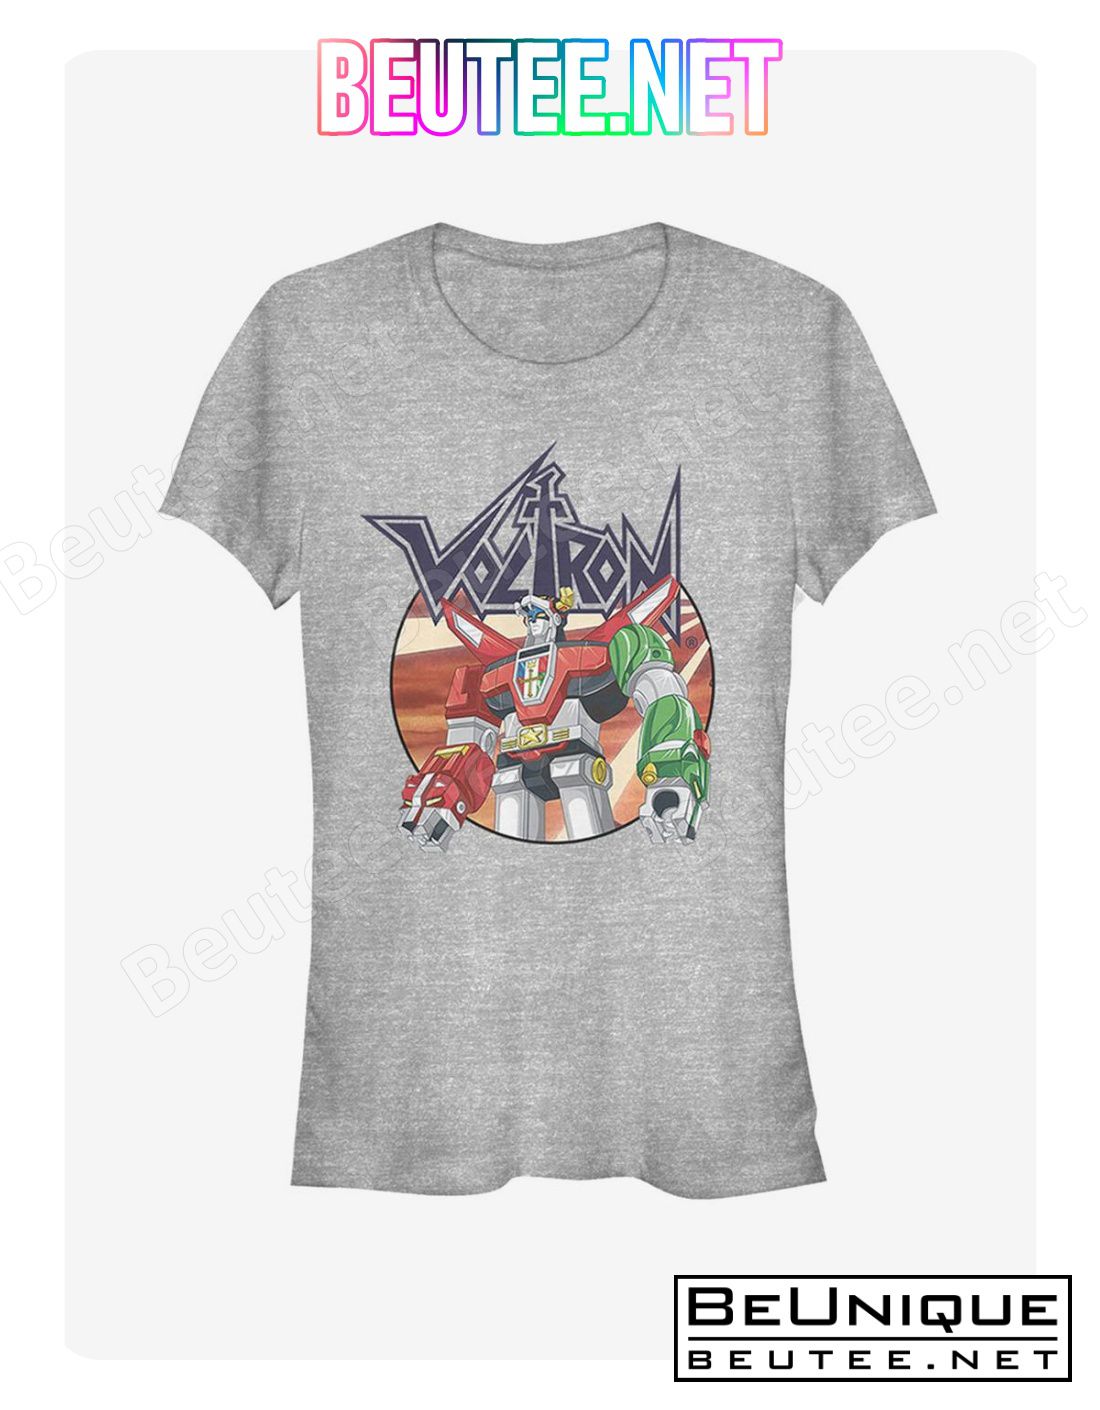 Voltron Robot Circle T-Shirt